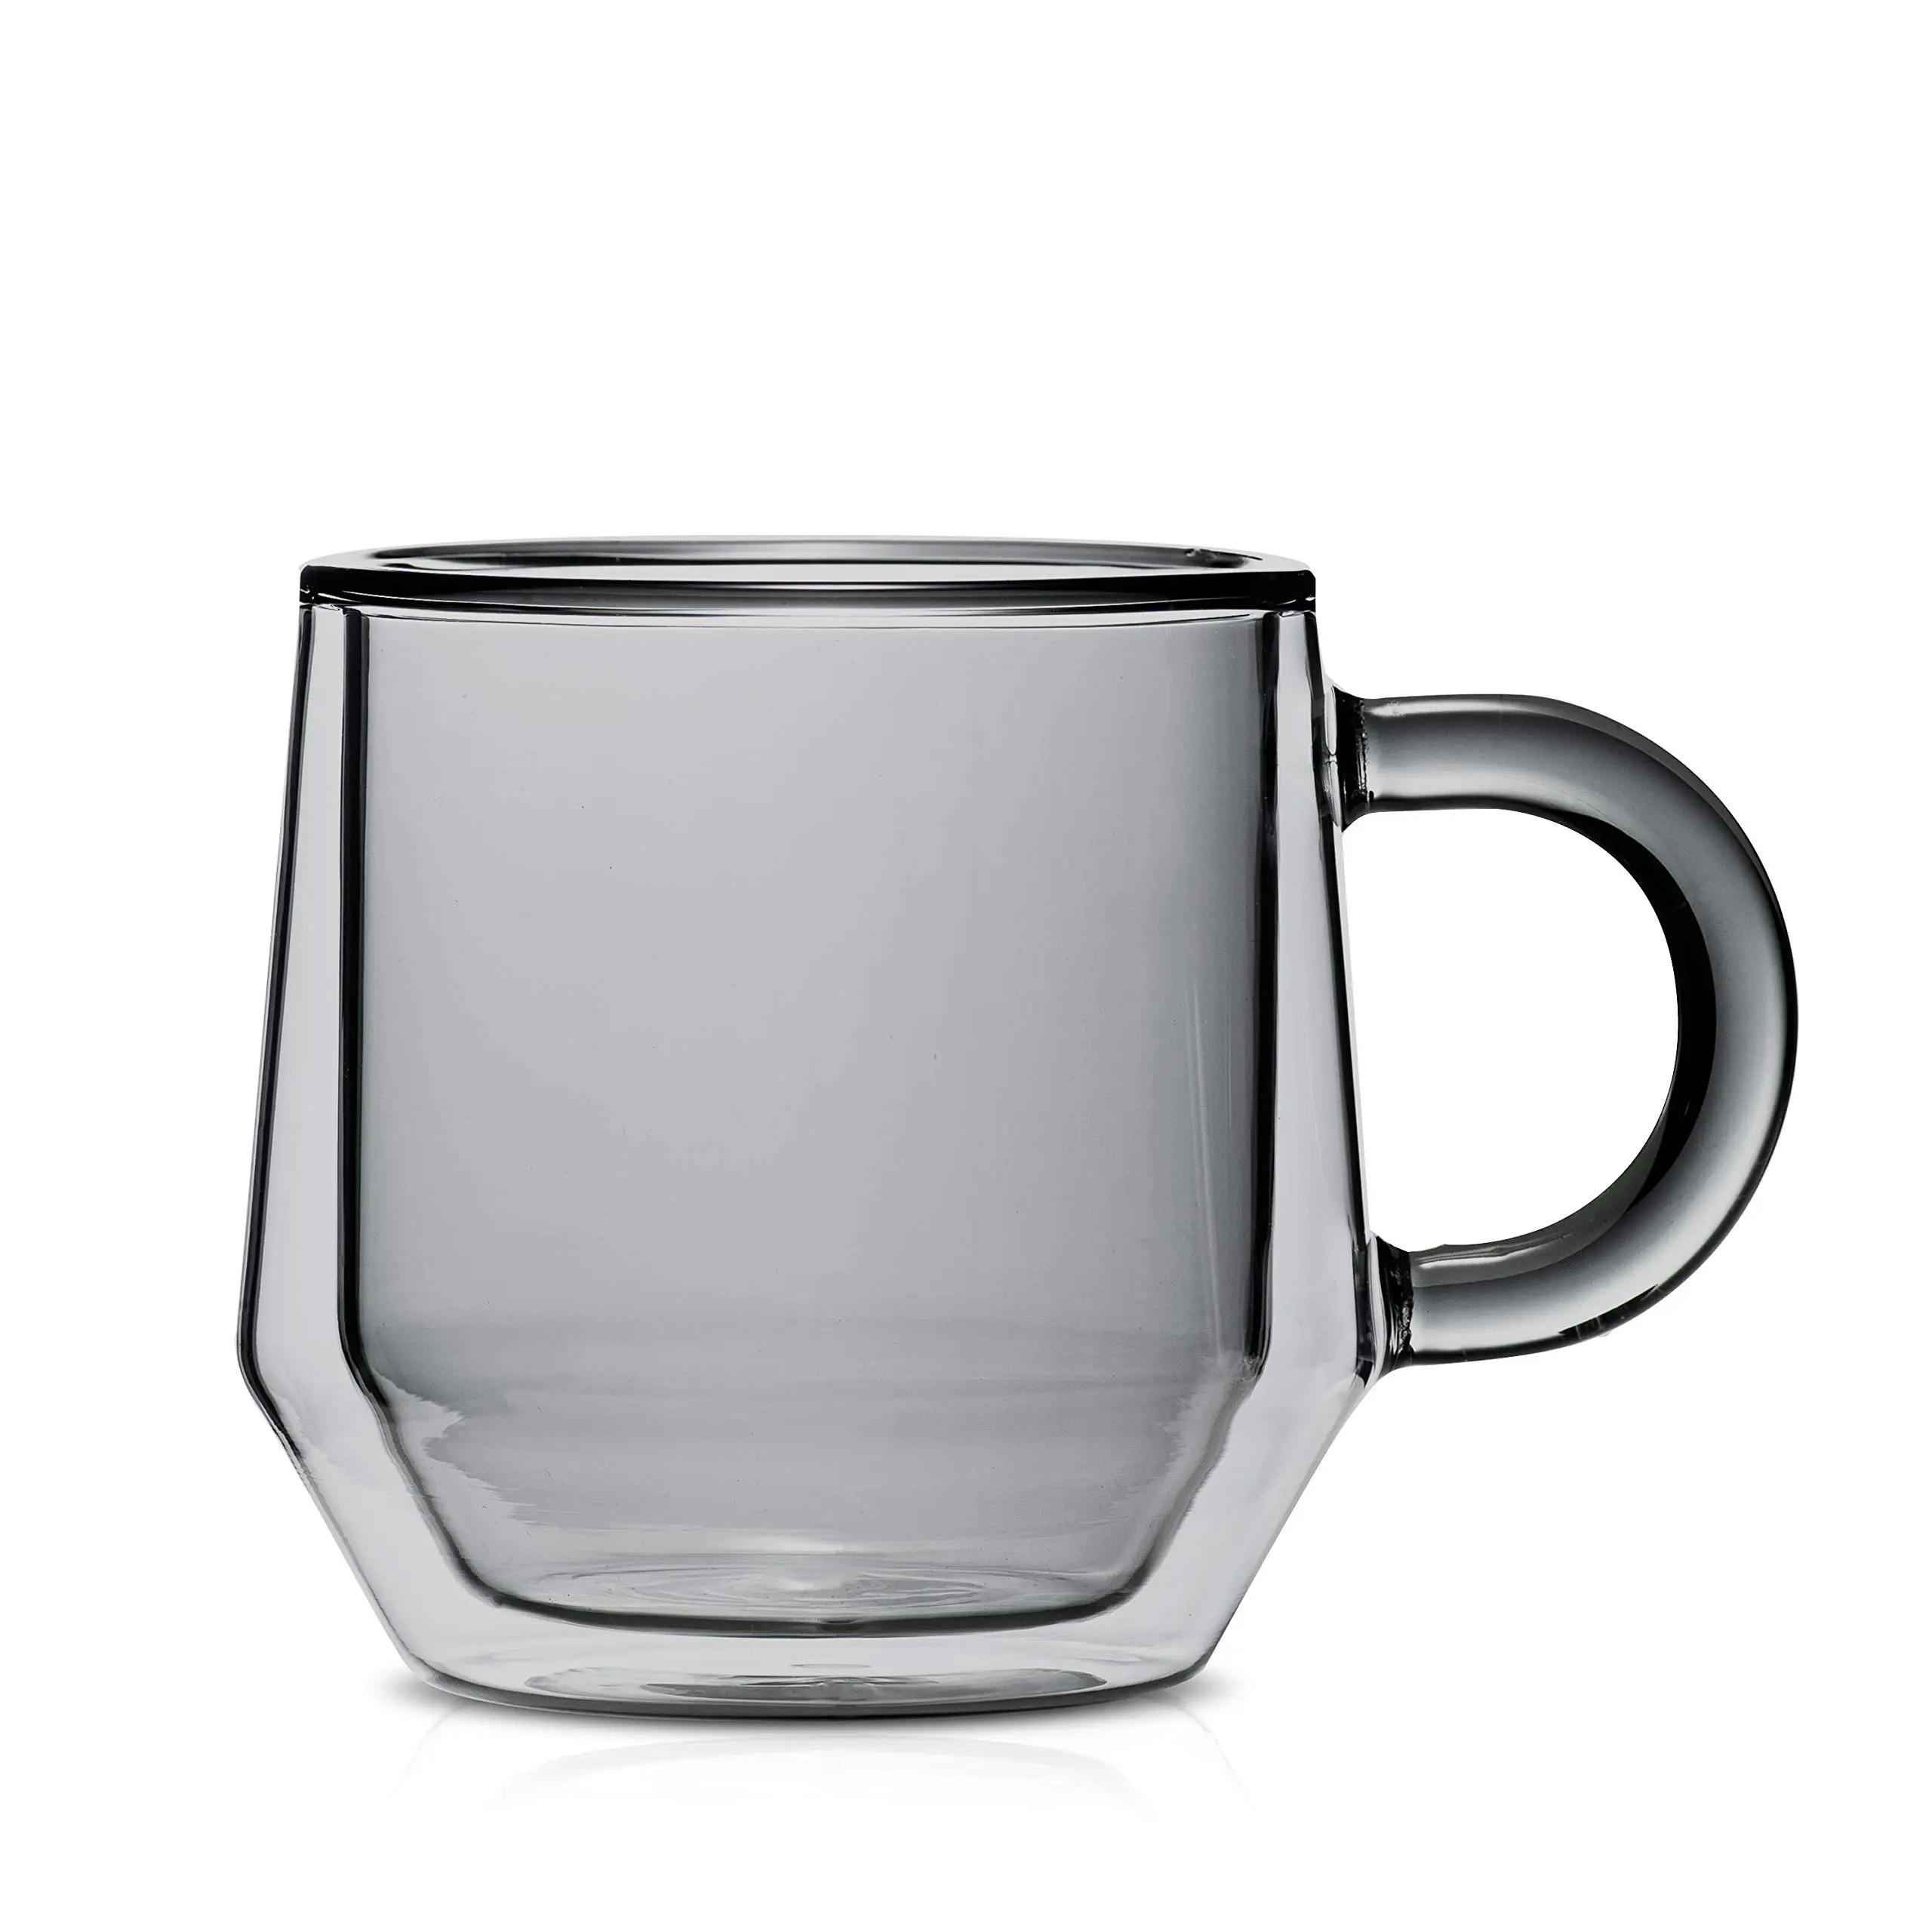 smoked glass cups - Why use glass coffee mugs